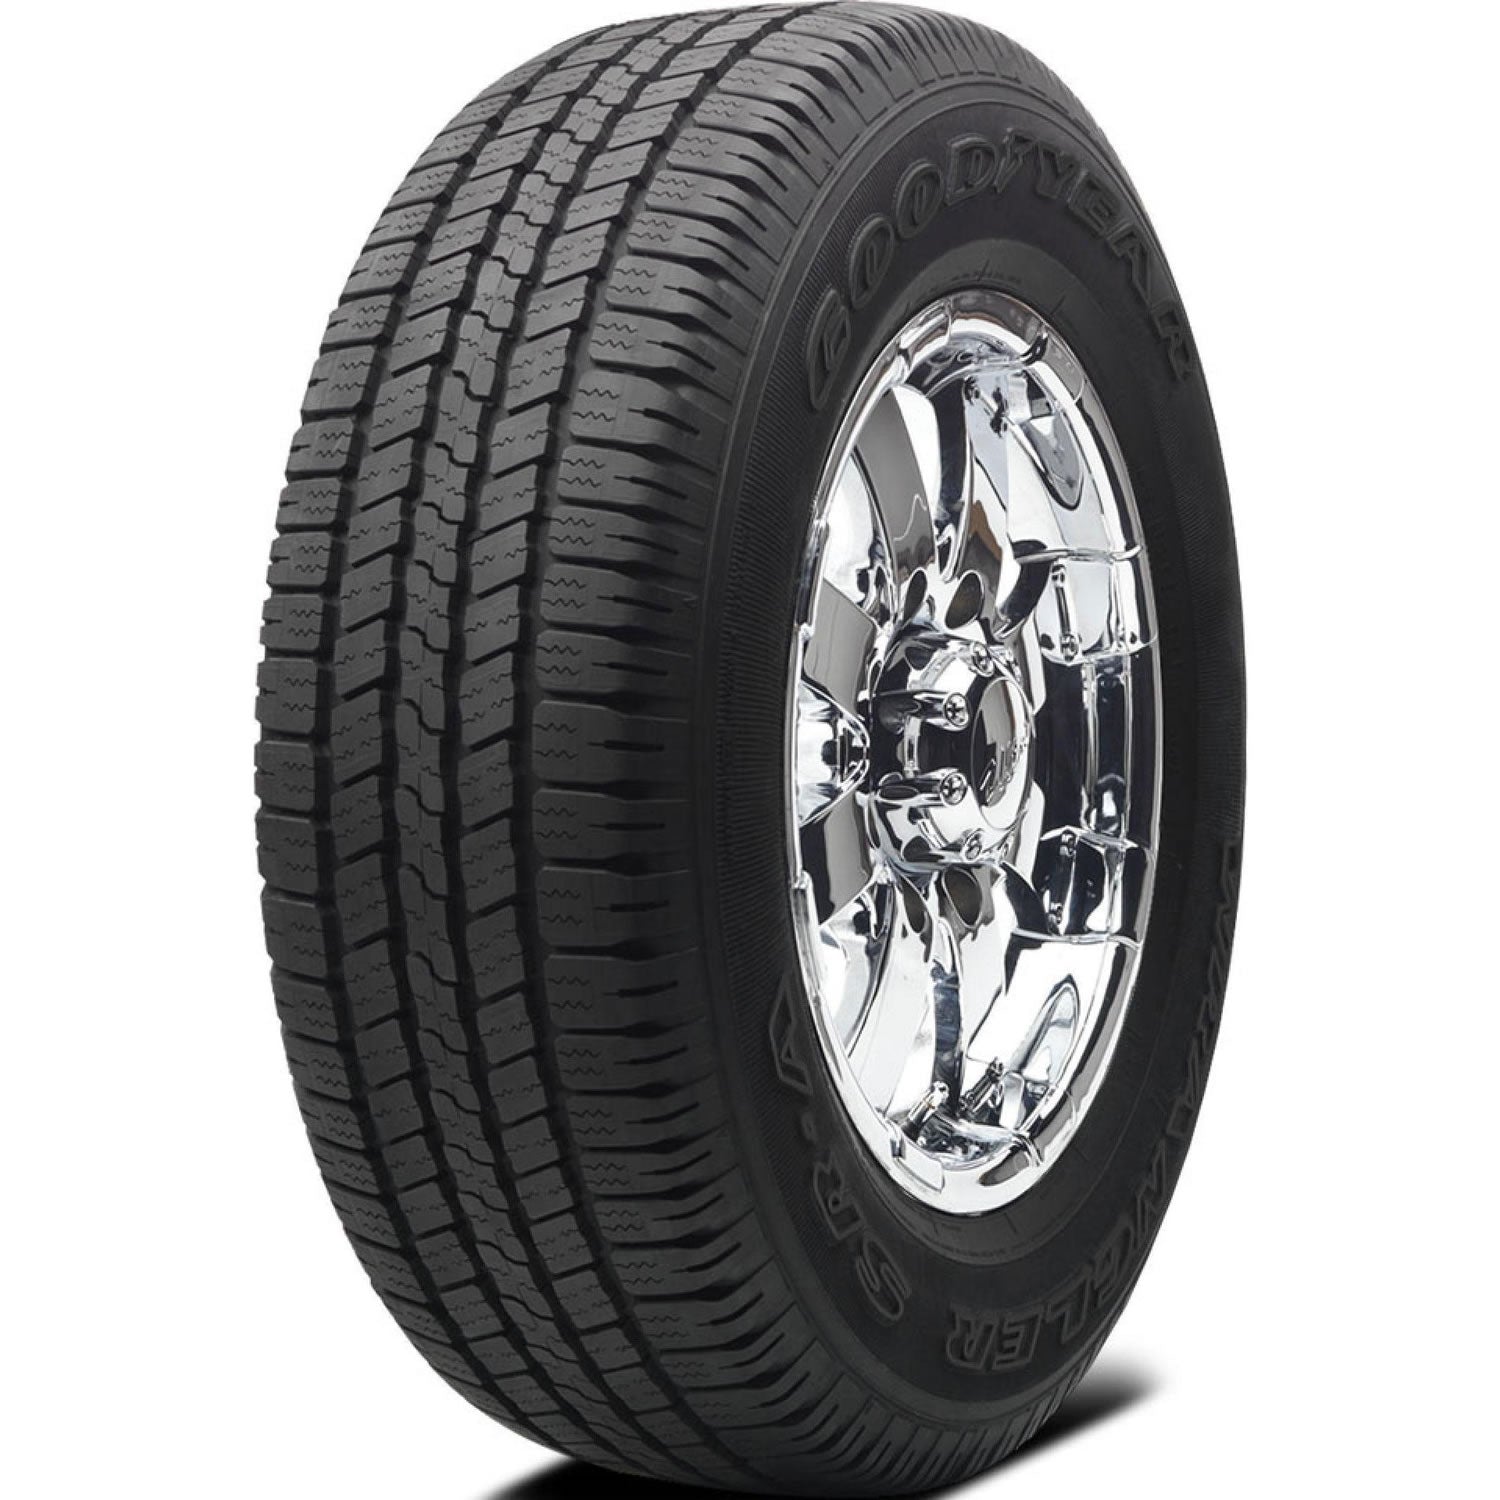 GOODYEAR WRANGLER SR-A P245/65R17 (29.5X9.8R 17) Tires